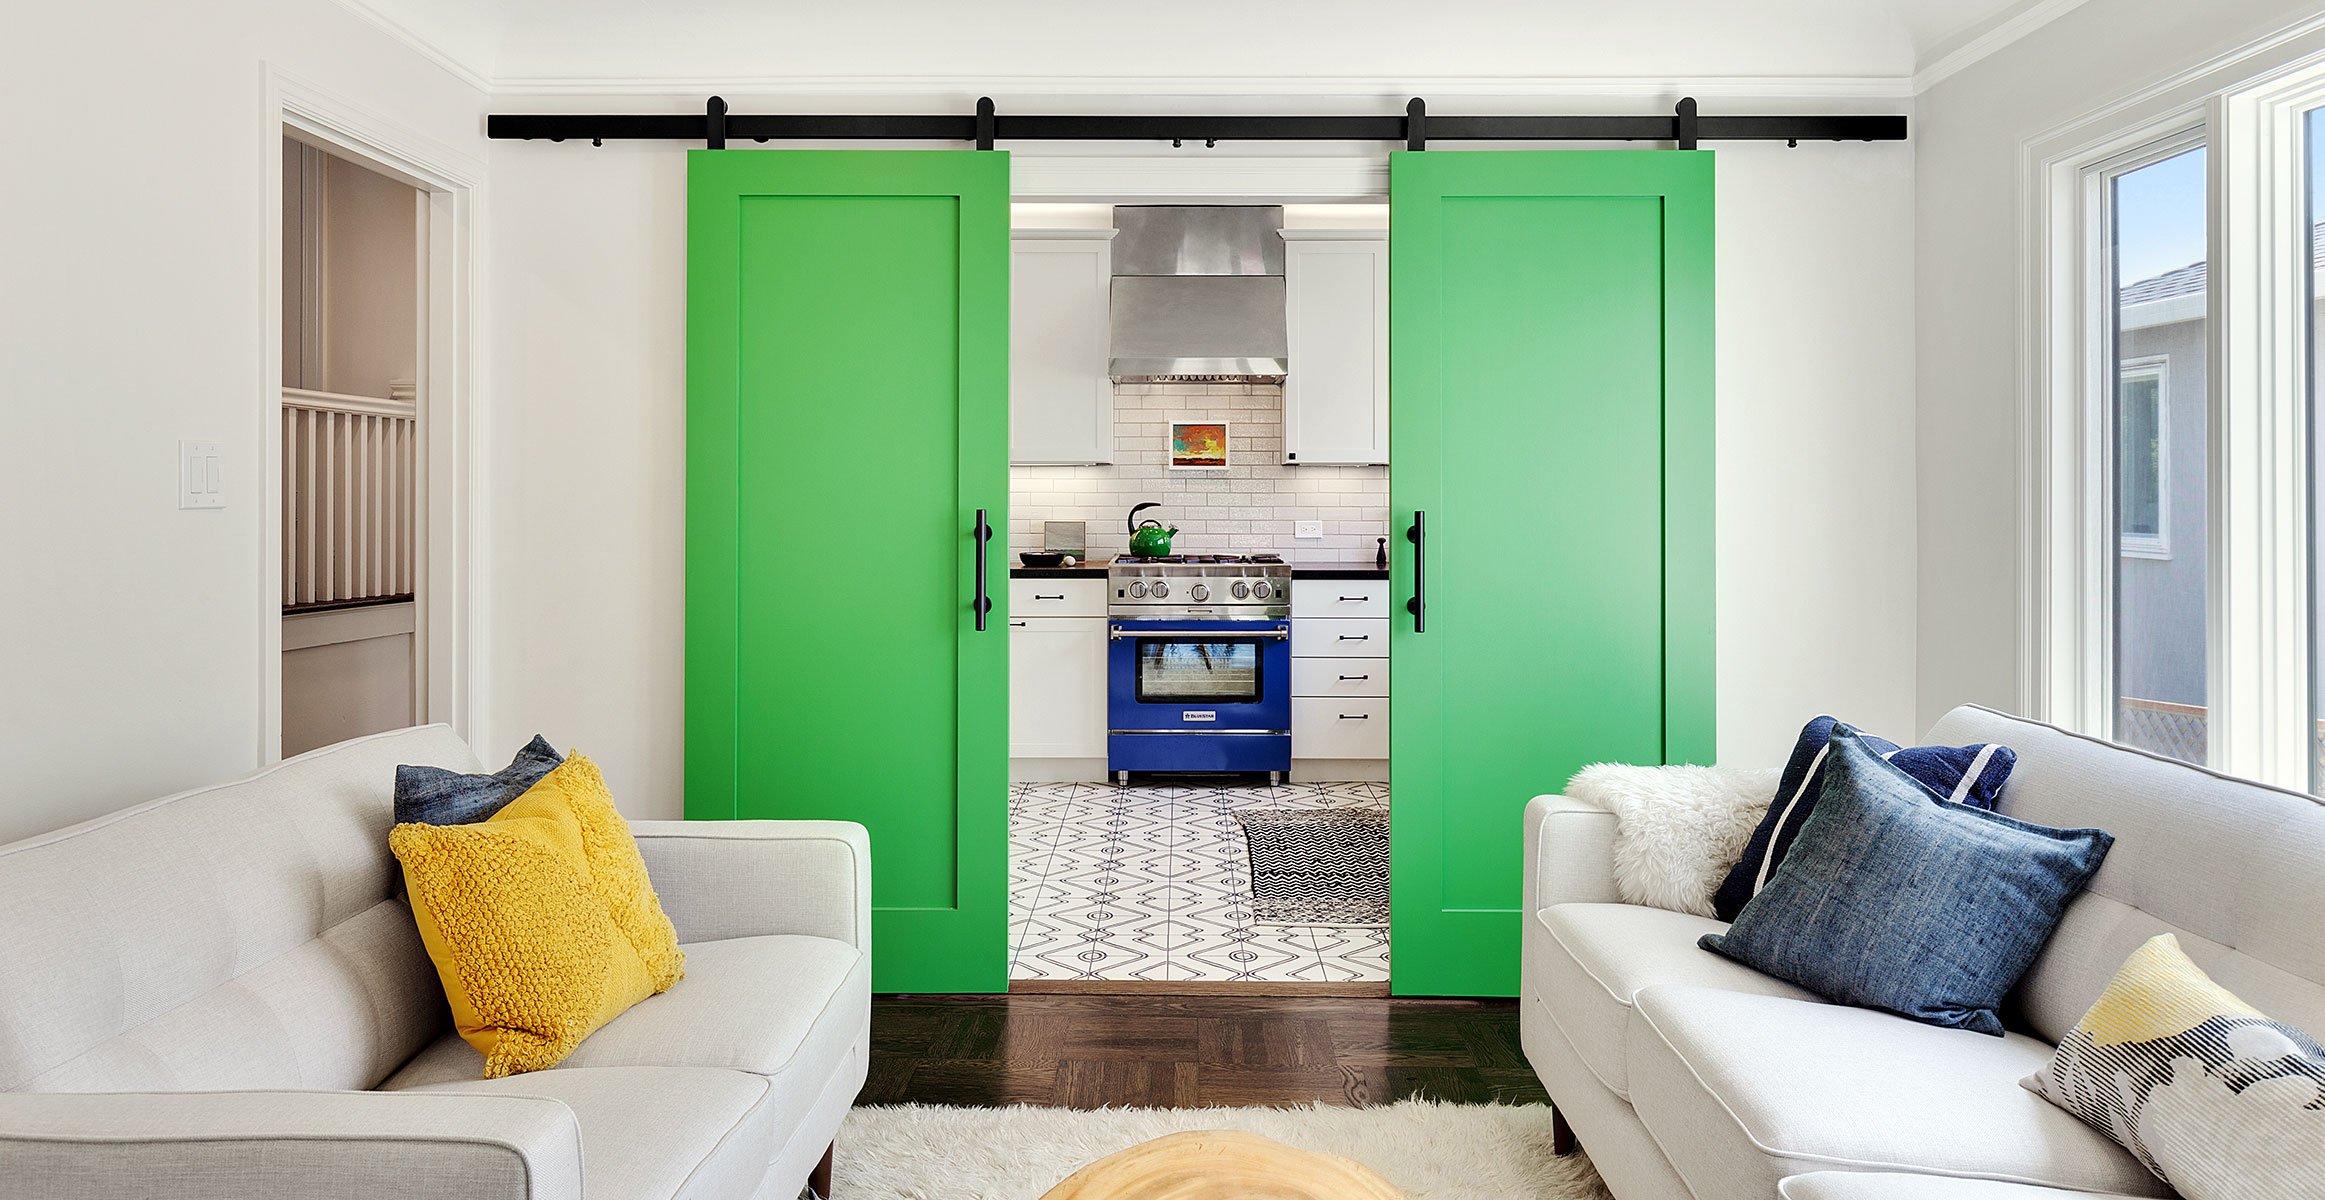 Loki sliding barn door hardware in black finish installed on green bi-parting kitchen doors.